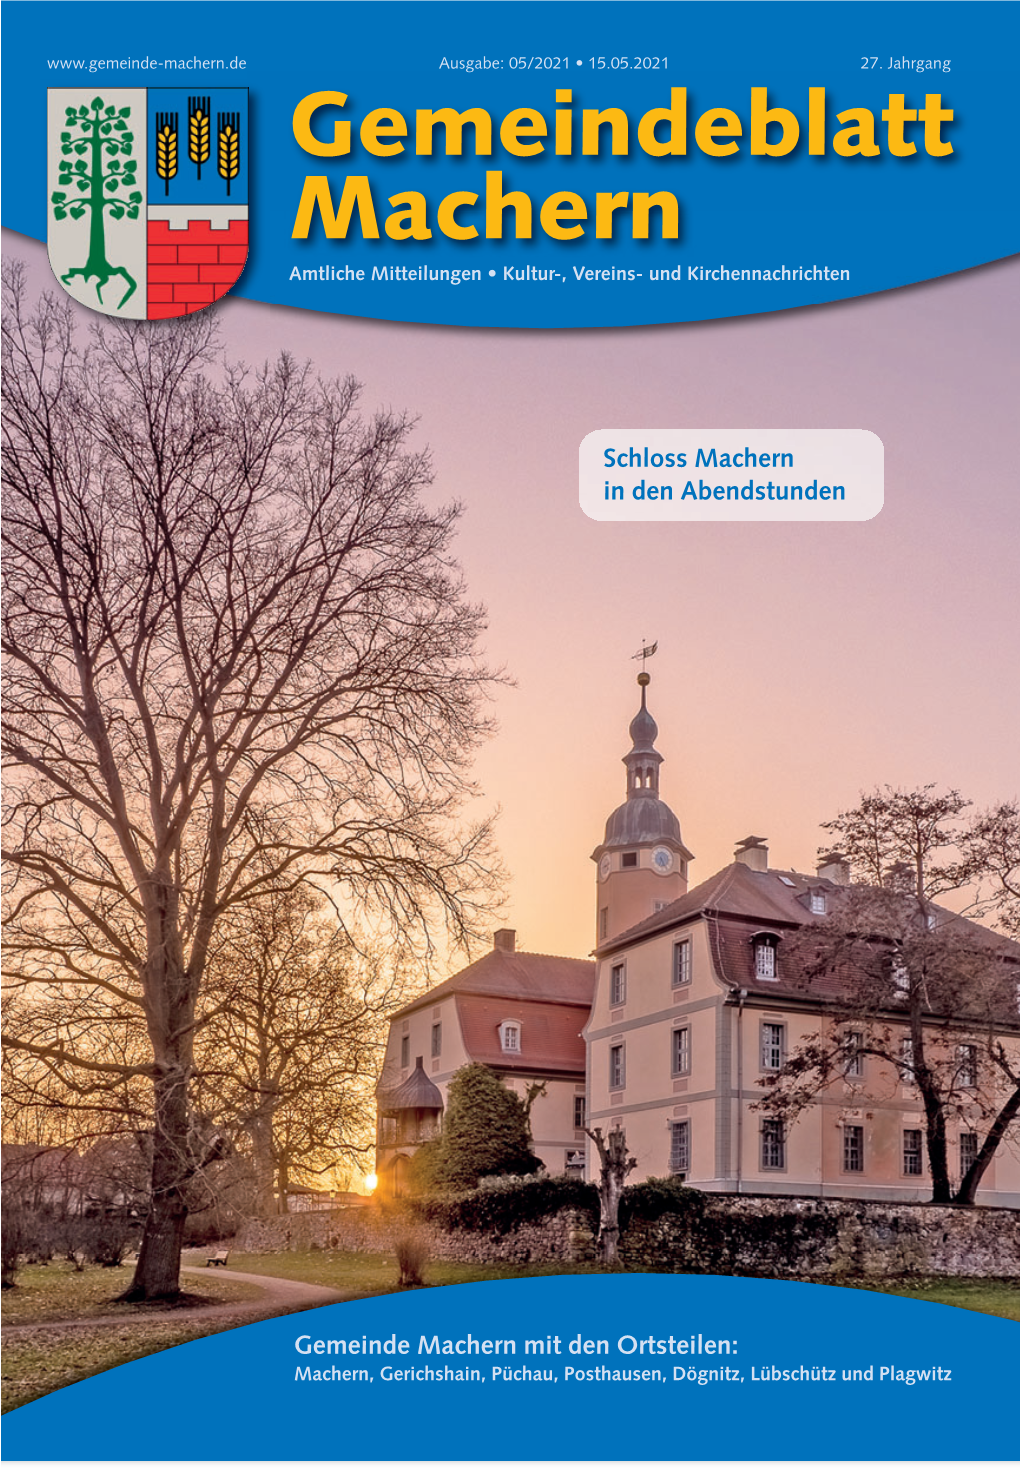 Gemeindeblatt Machern (Amtsblatt) Mai 2021.Pdf